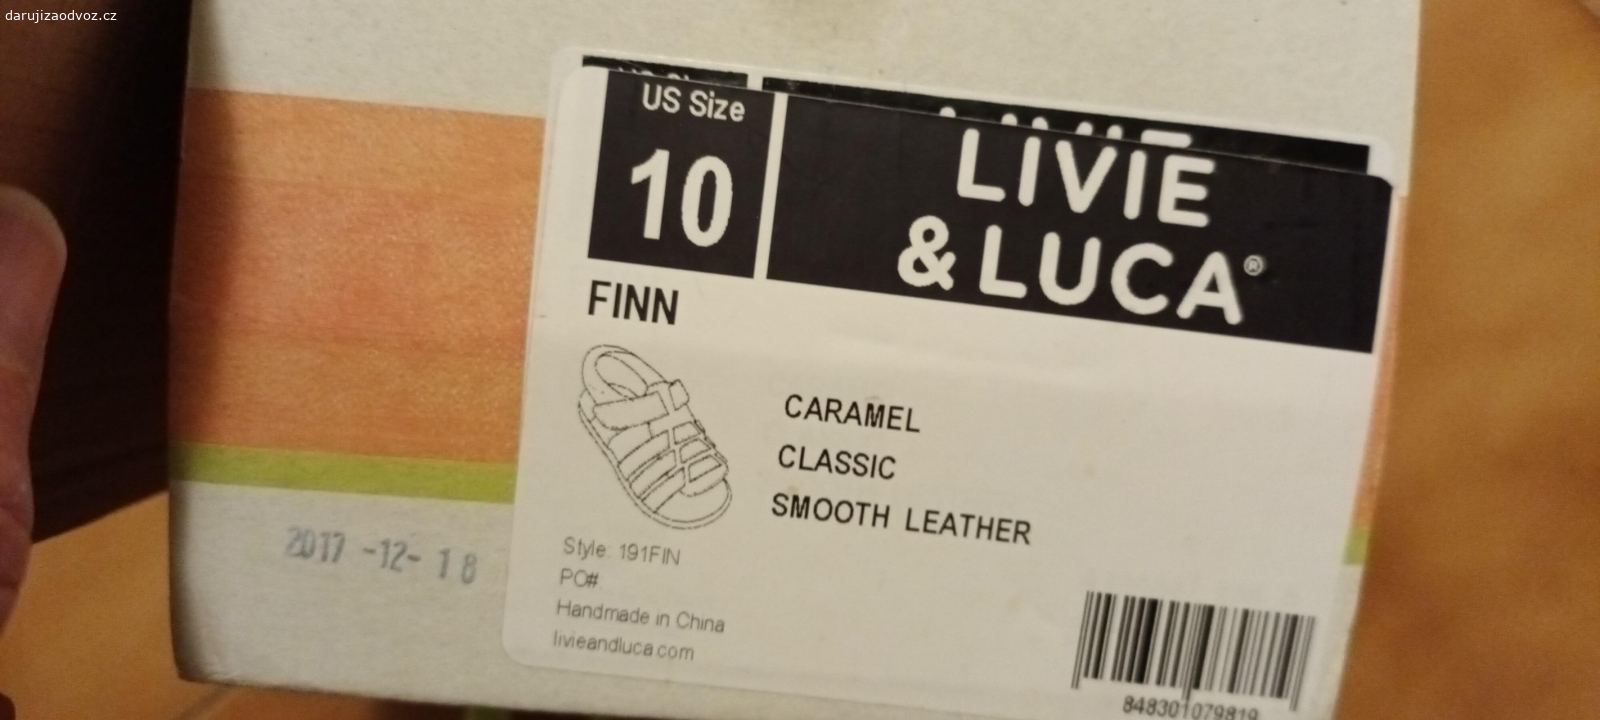 Kožené sandálky. Sandálky Livie&Luca na širokou nohu. Vnitřní délka 16,2cm, šířka 7cm. Mohu poslat za kód Zásilkovny.